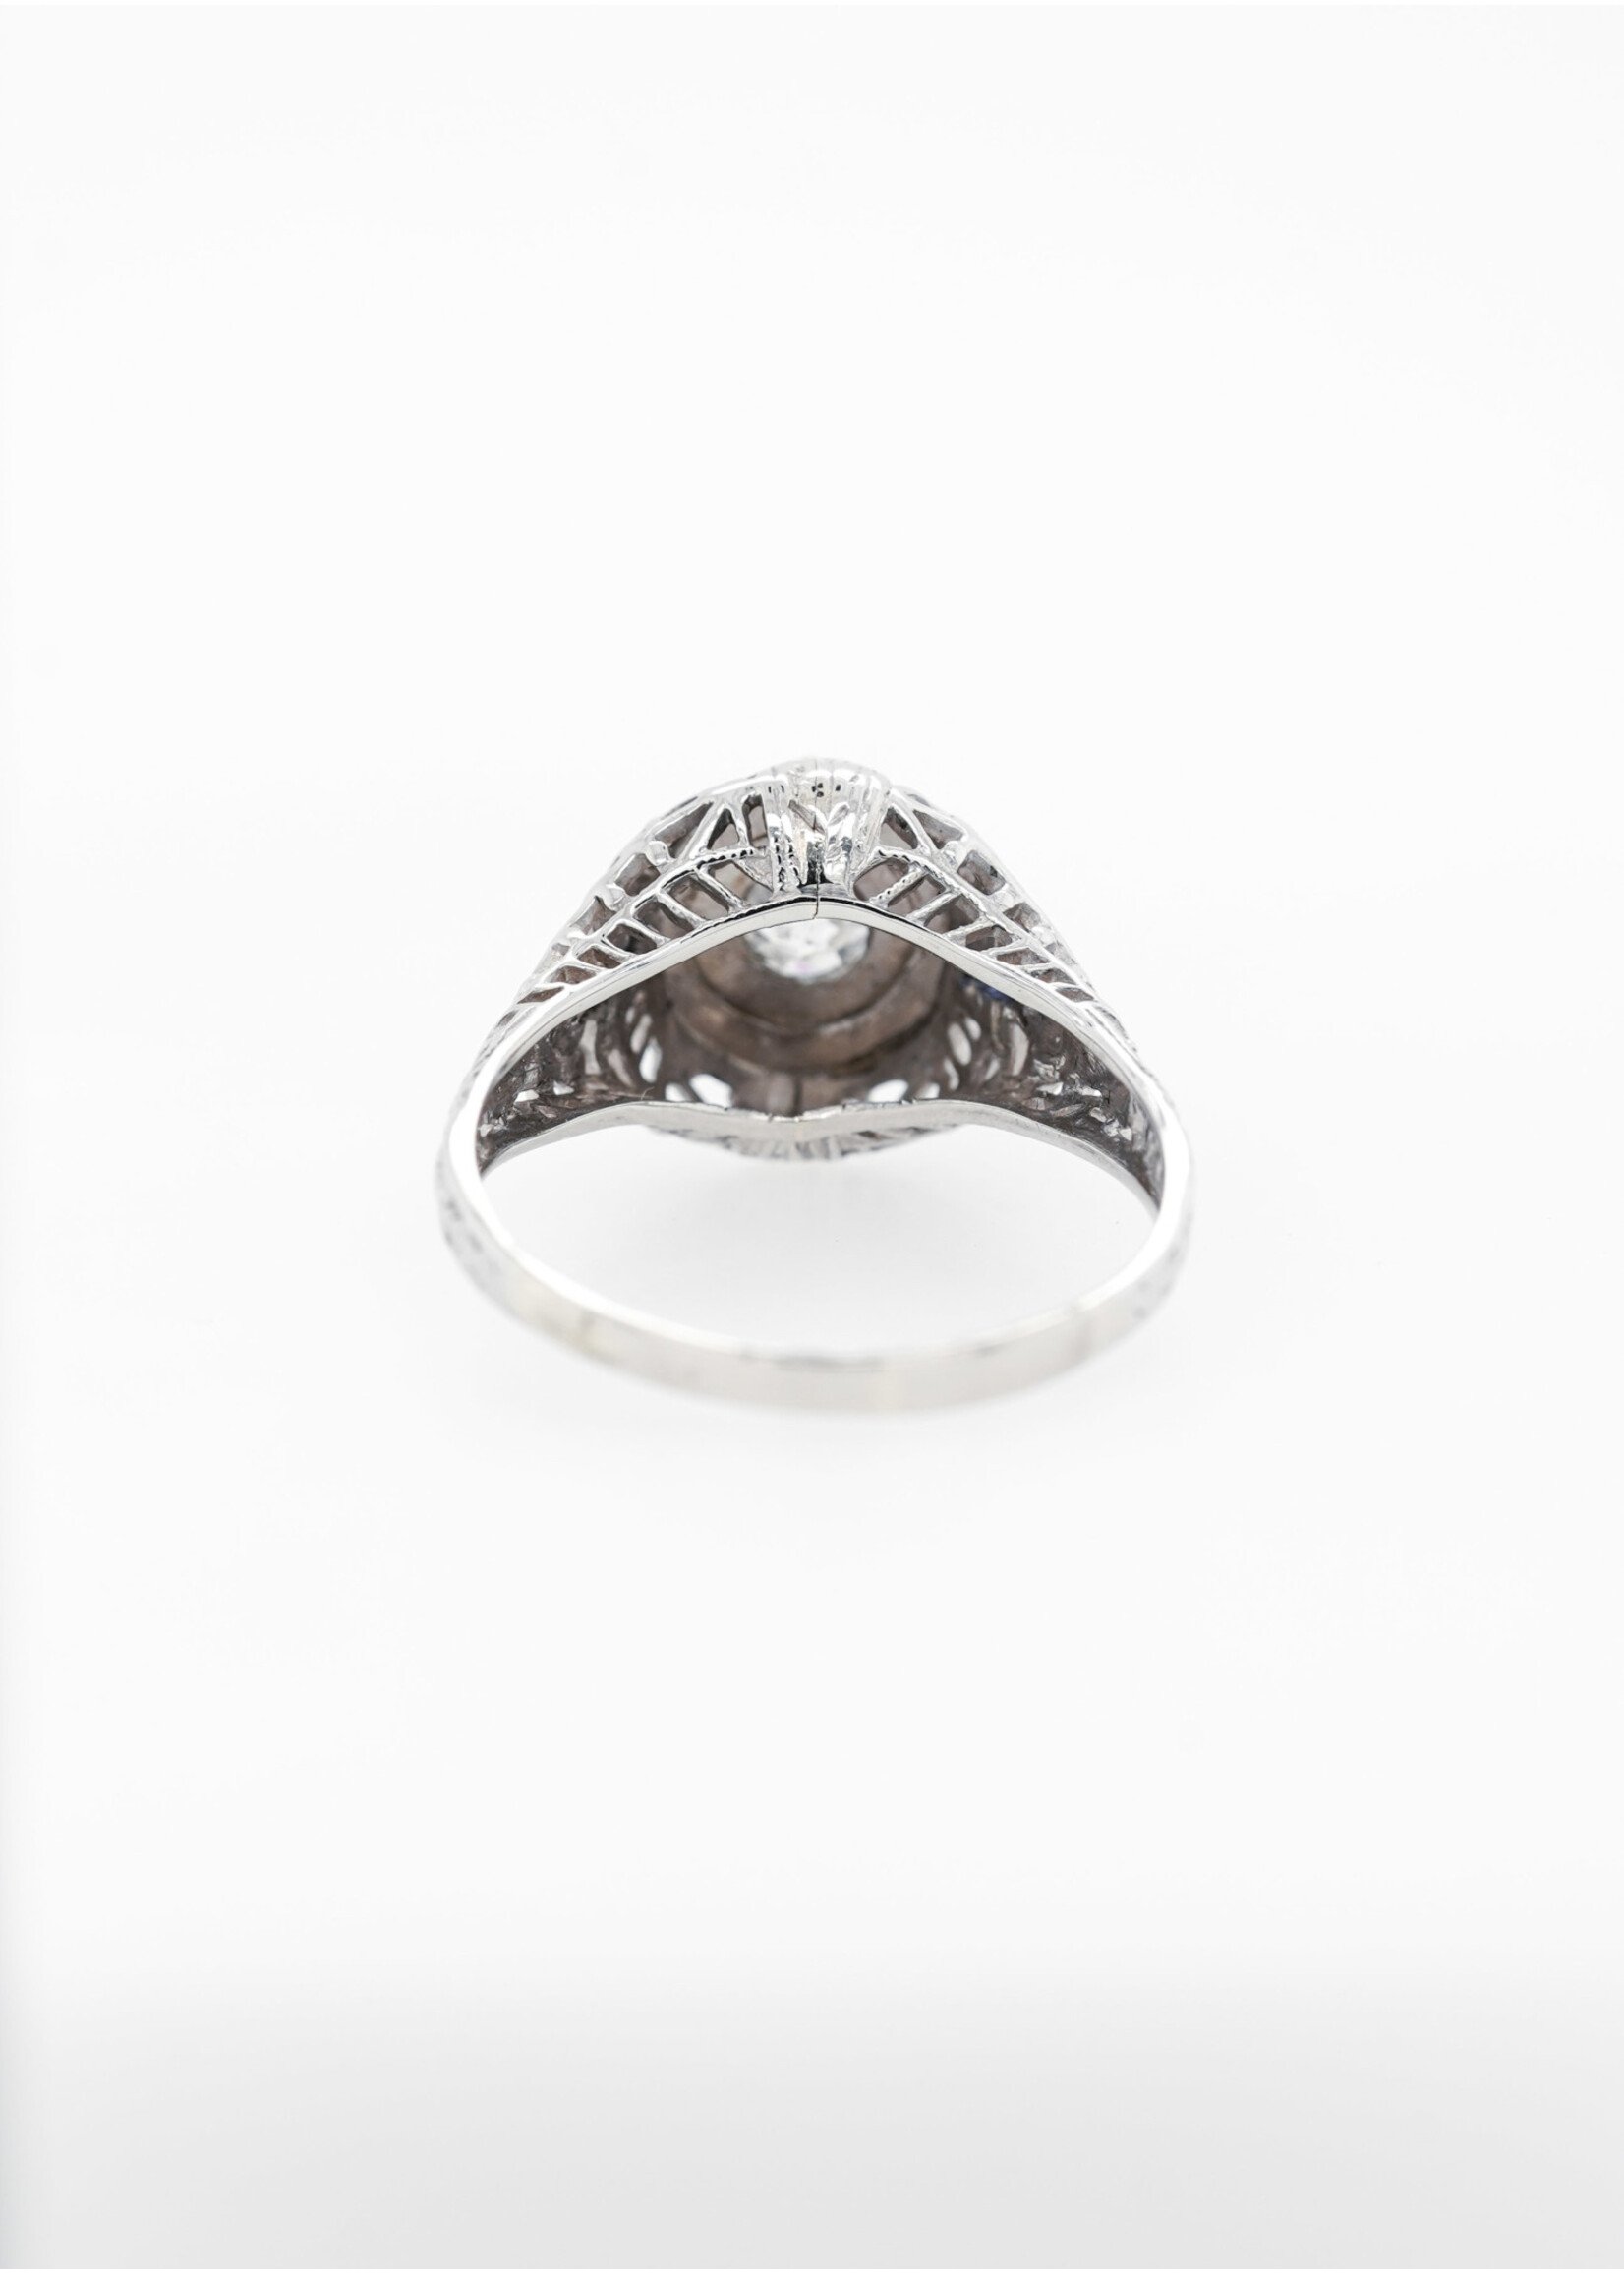 18KW 3.13g .25ctw (.20ctr) G/I1 Old European Cut Diamond Vintage Ring (size 7)